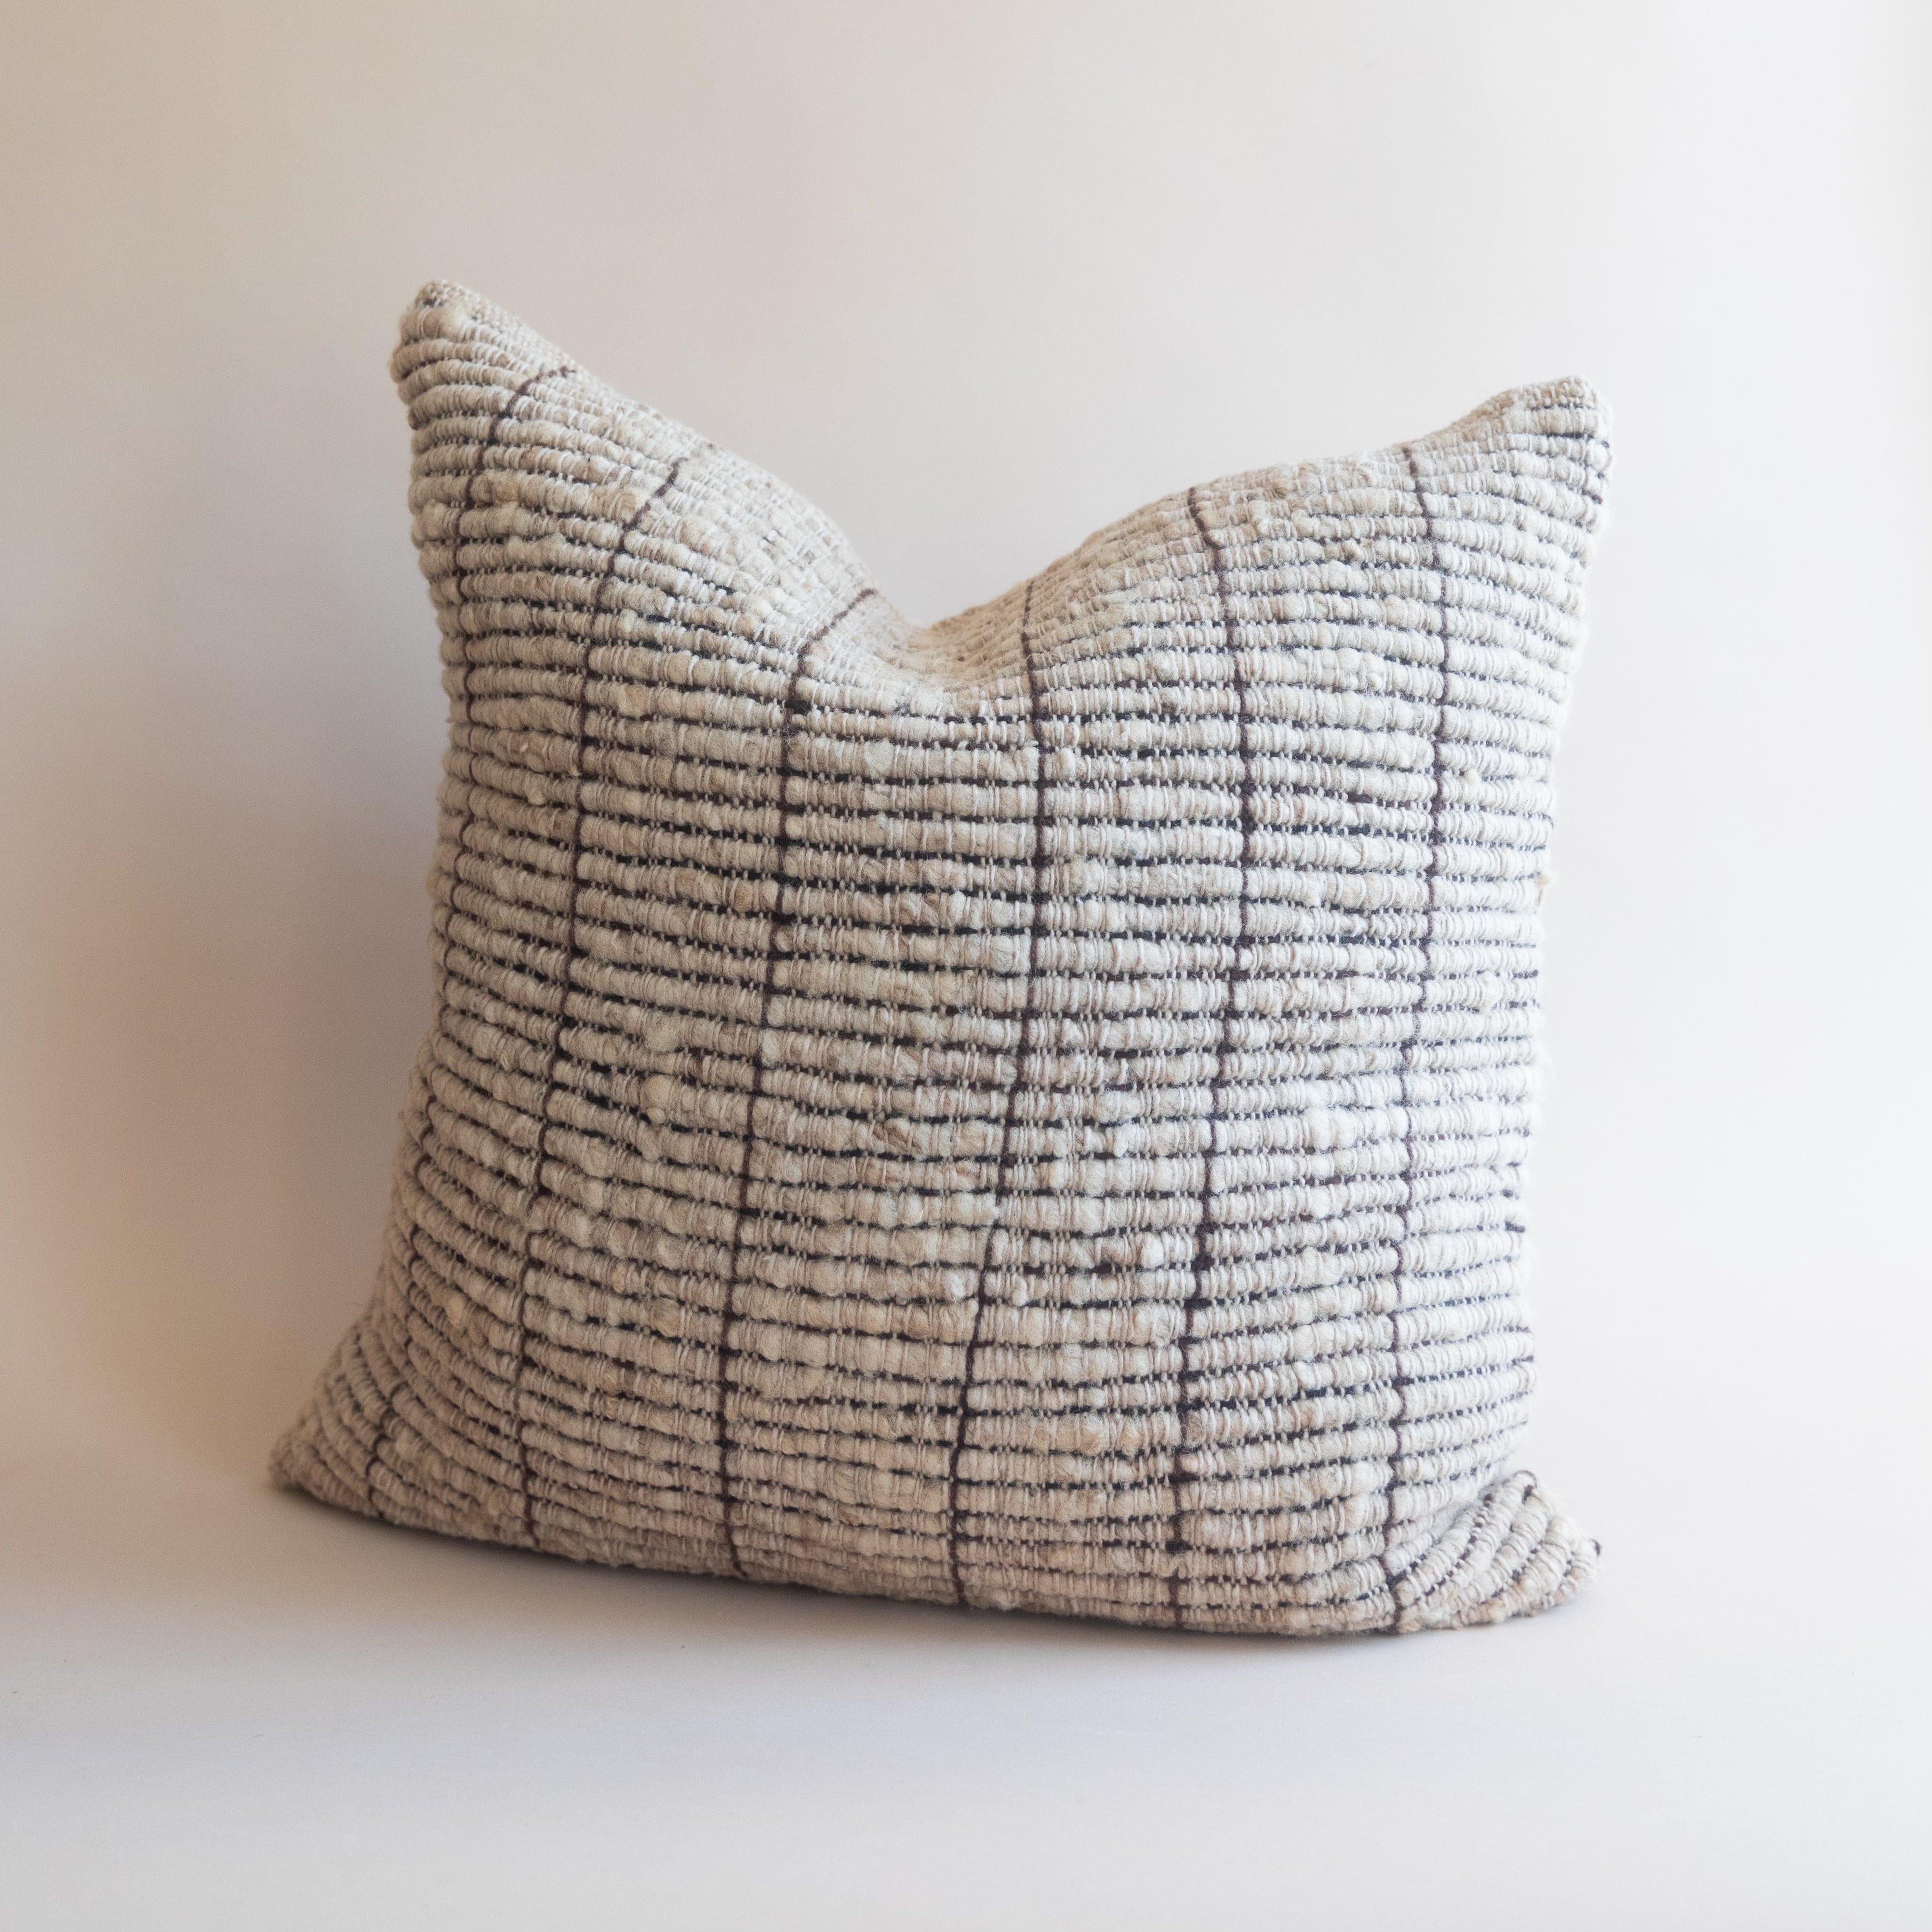 Treko Pillows Oatmeal/Brown / 26" x 26" Texturized Pillow by Treko